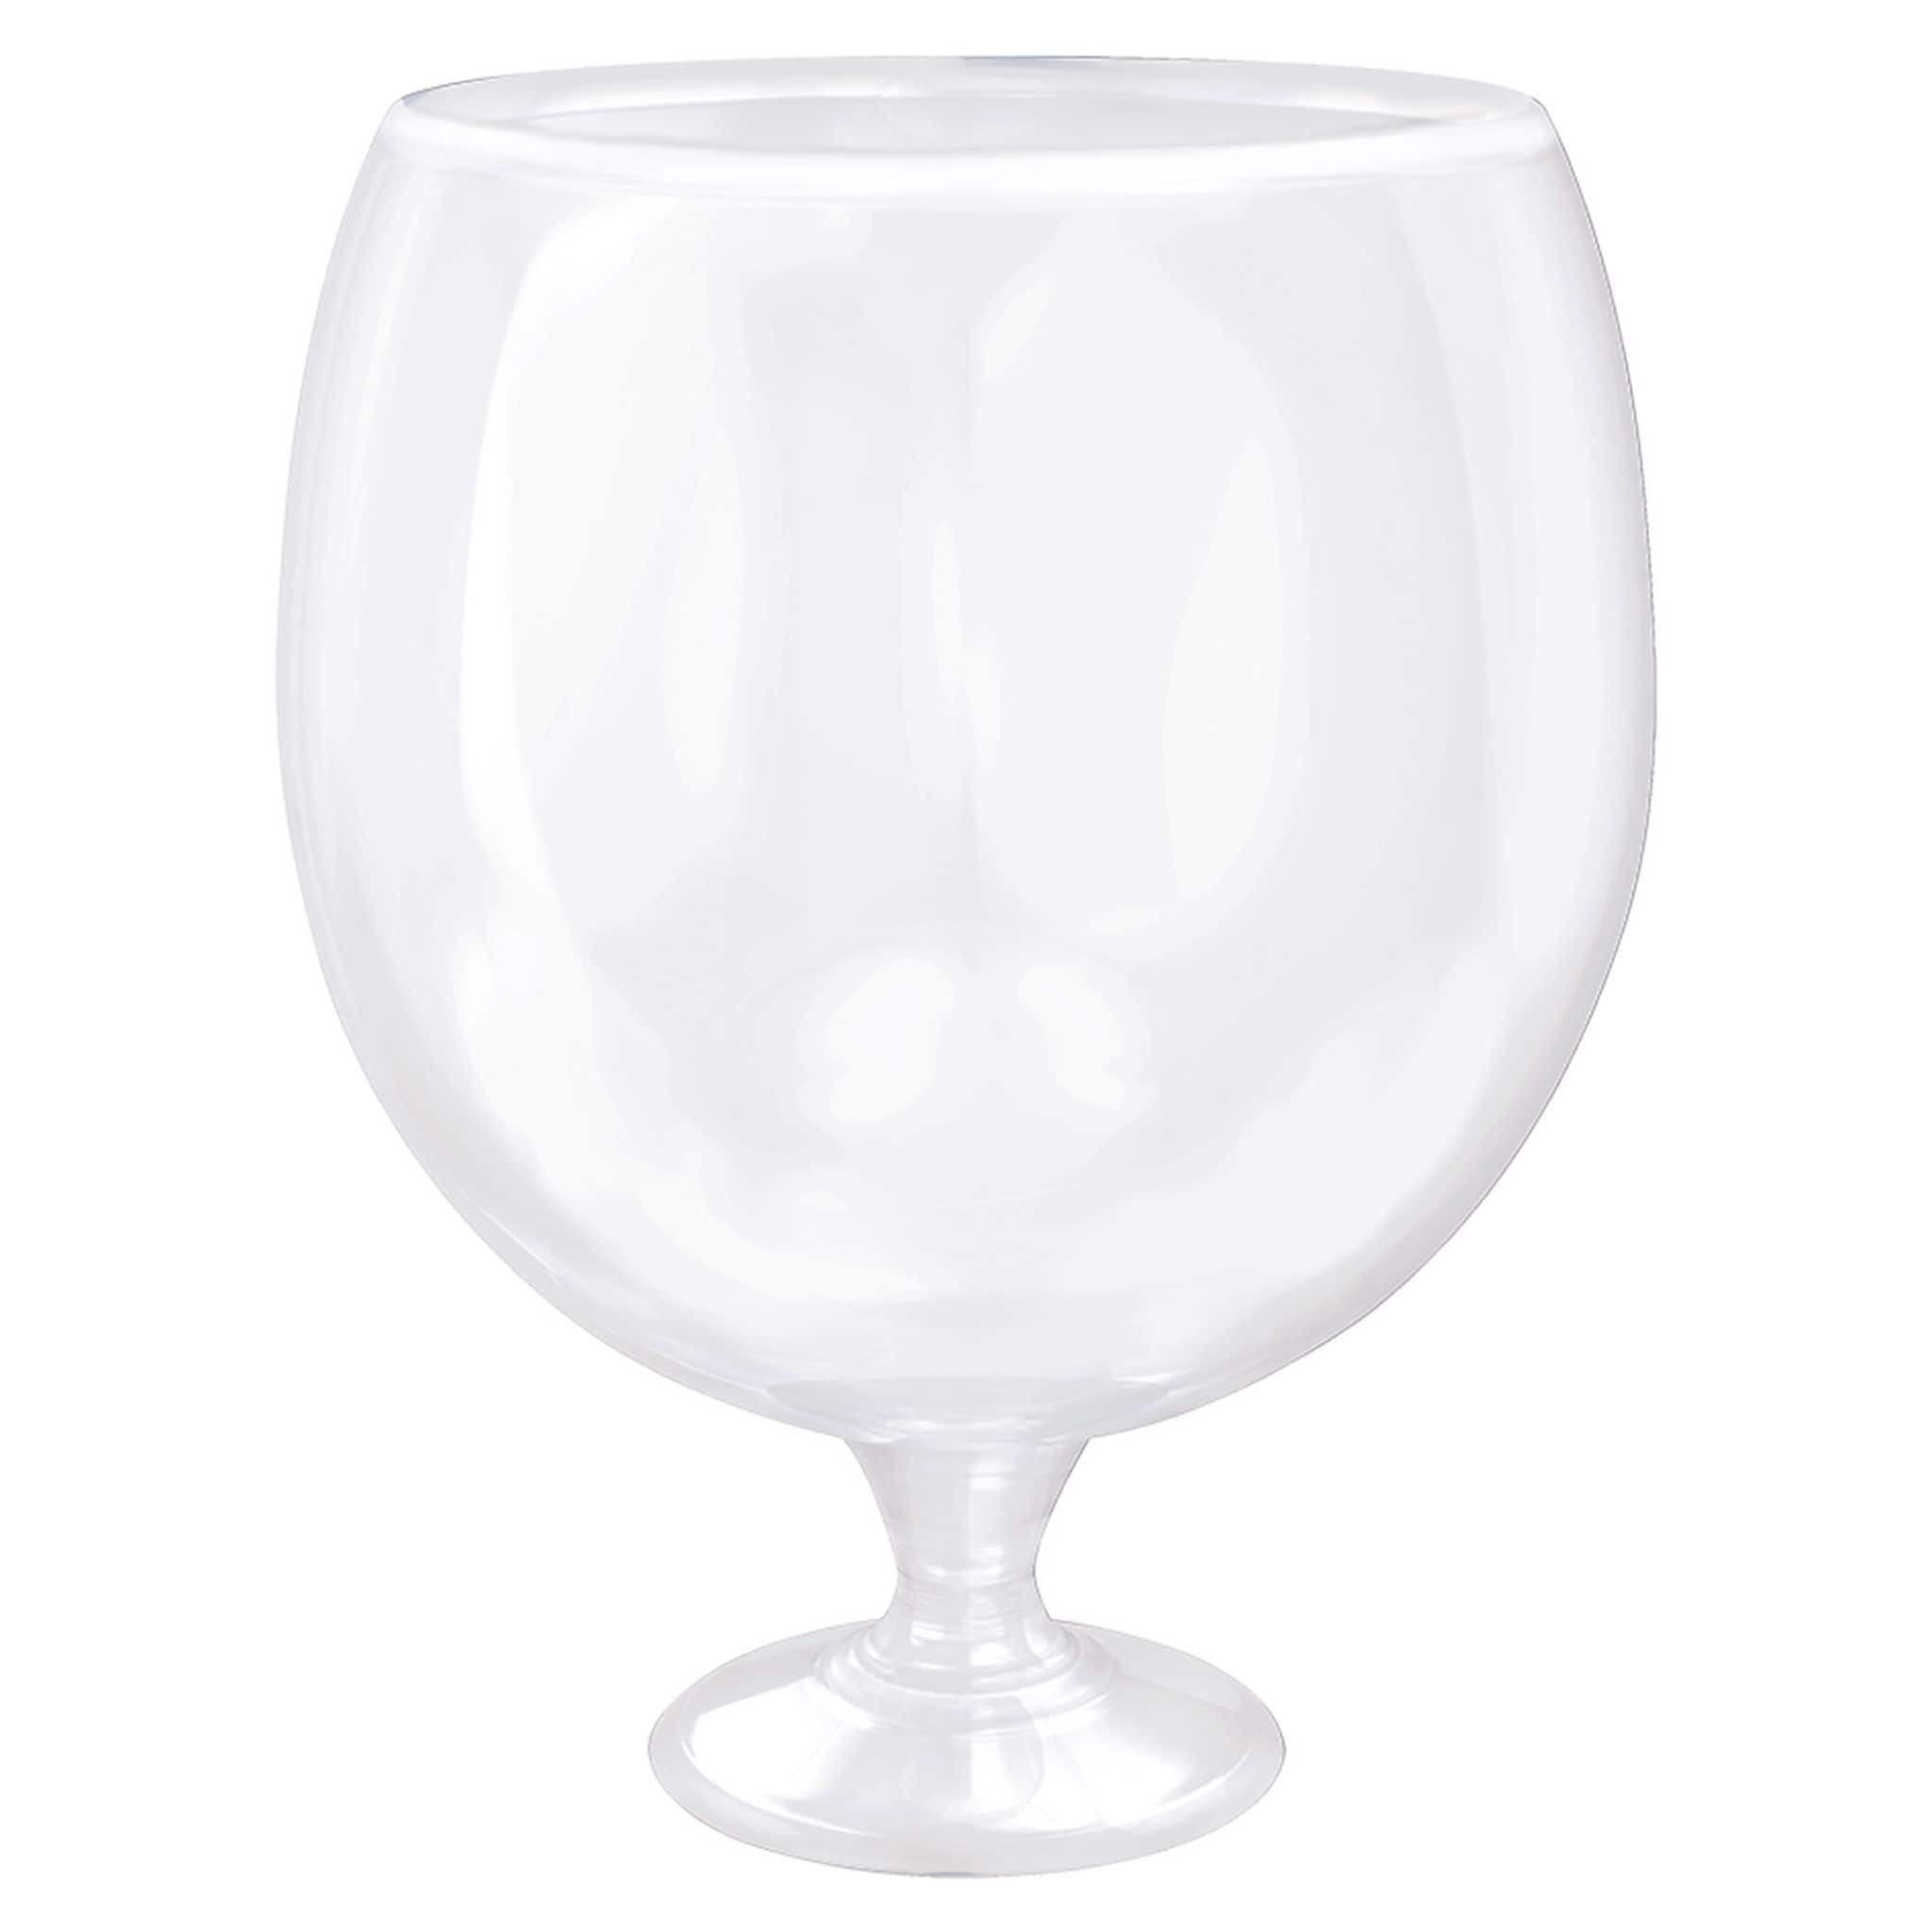 Jumbo White Wine Cup 